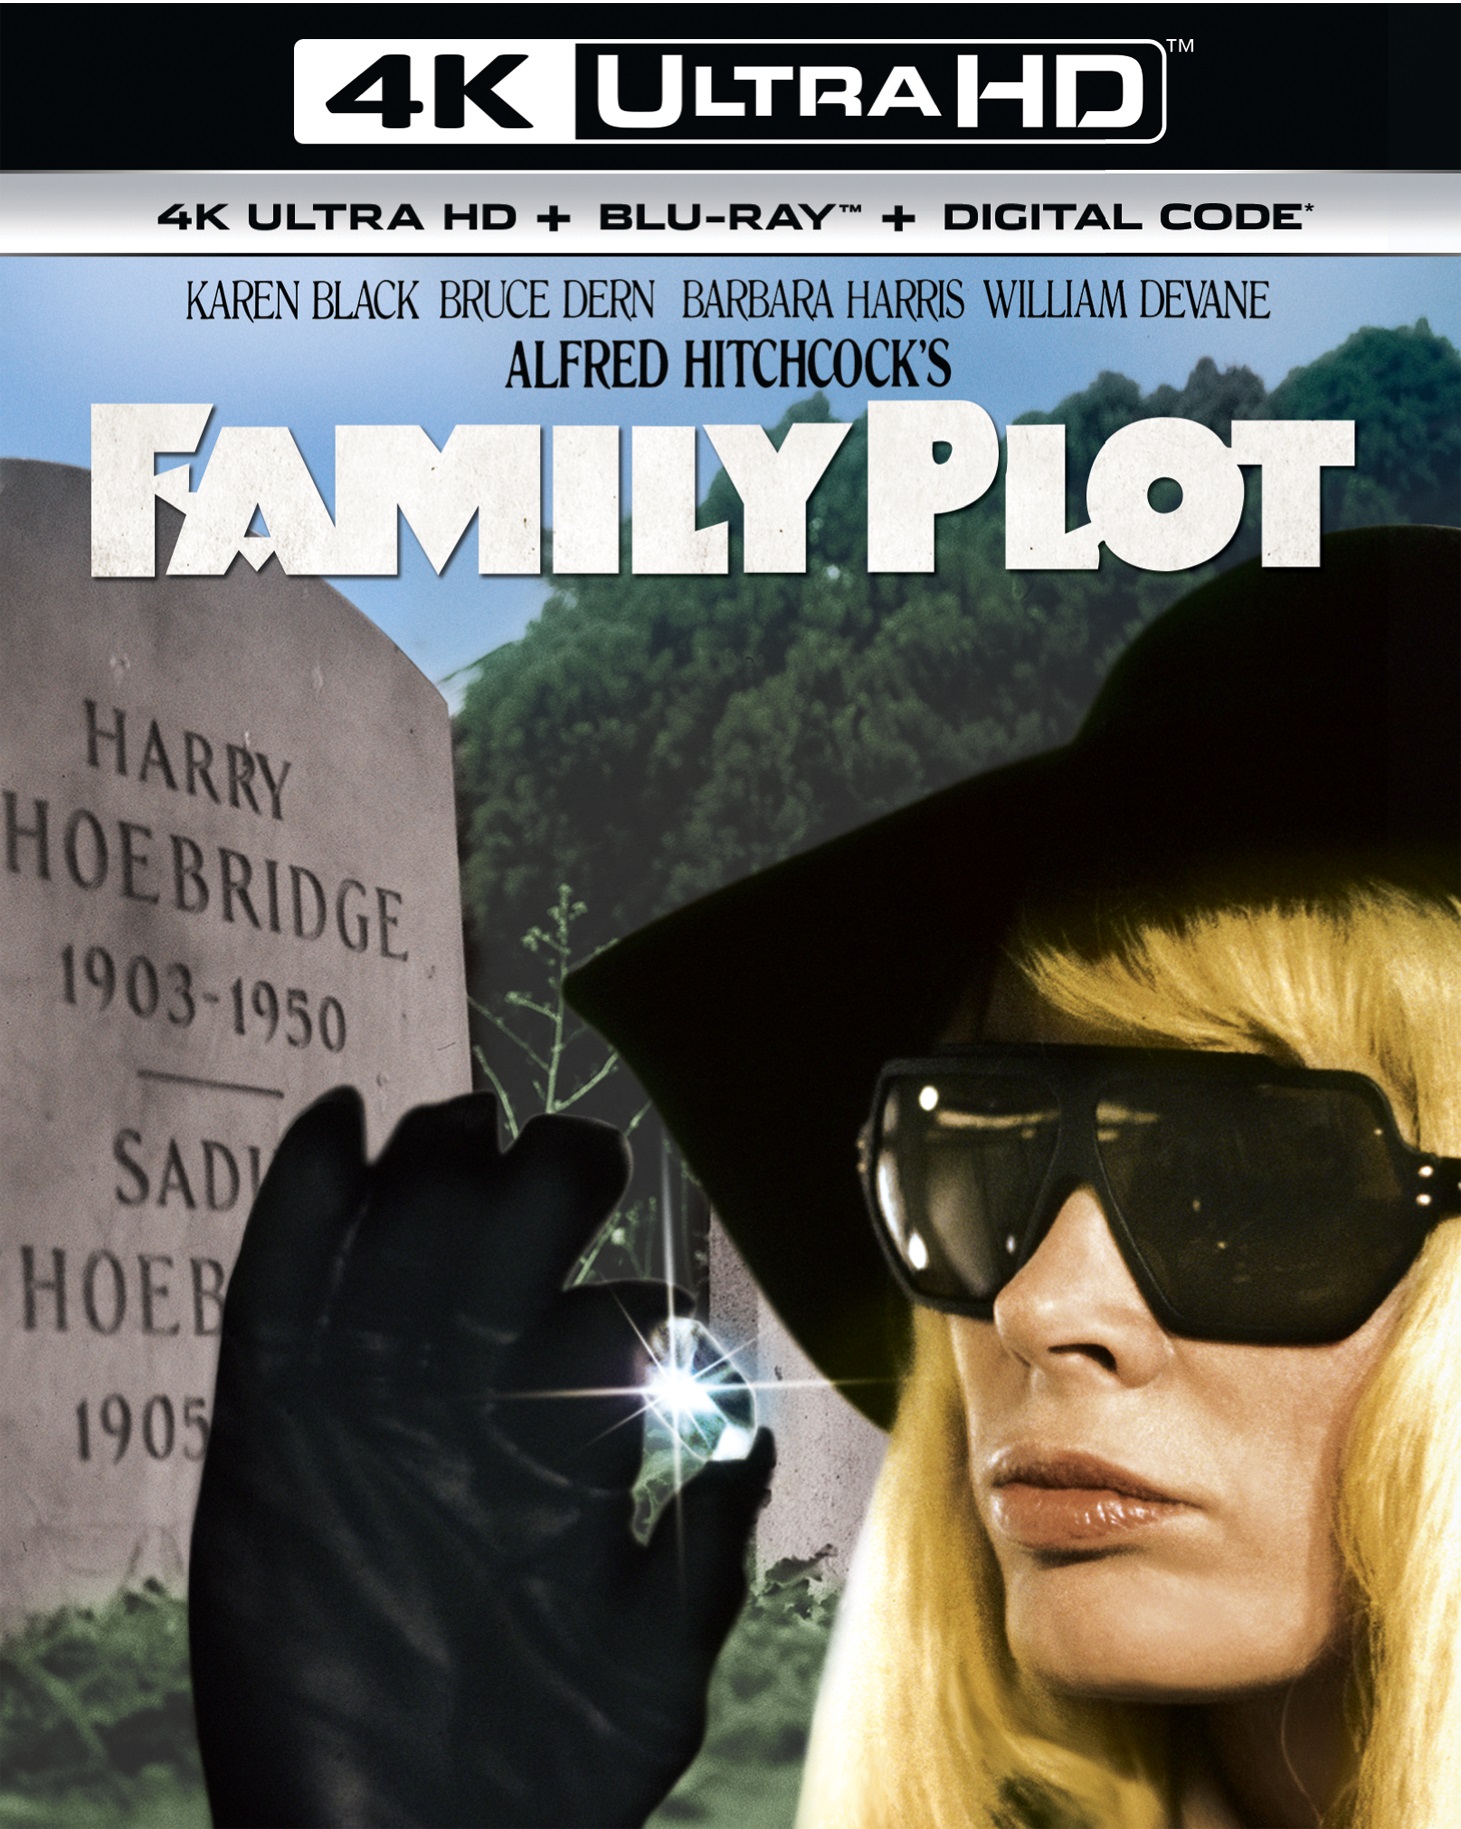 Family Plot (4K Ultra HD + Blu-ray) - UHD [ 1976 ]  - Thriller Movies On 4K Ultra HD Blu-ray - Movies On GRUV